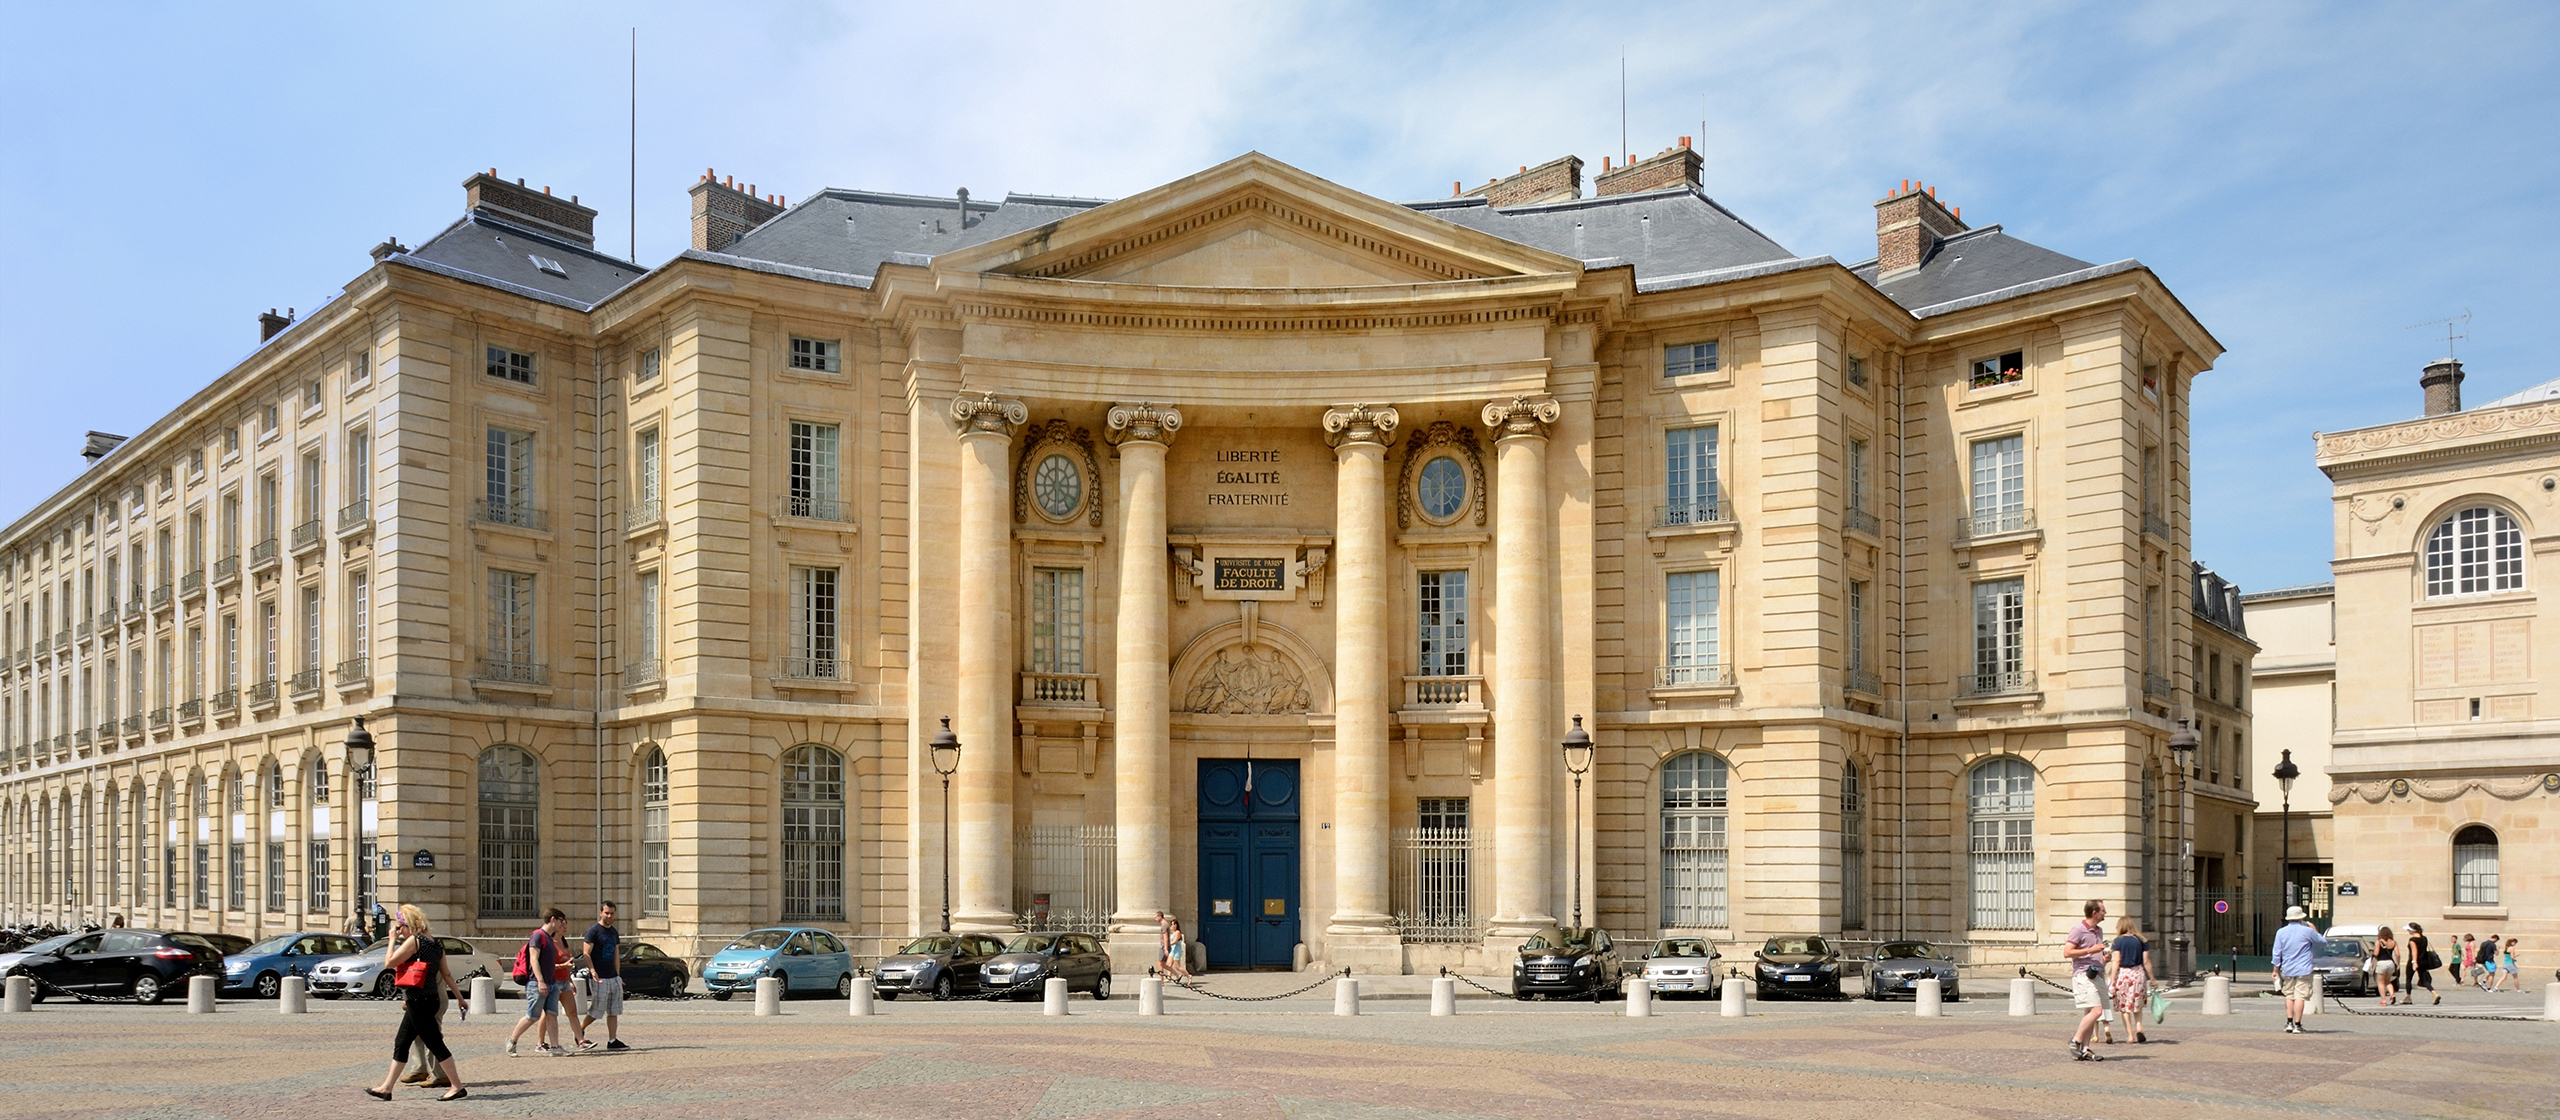 Panthéon-Sorbonne University in France